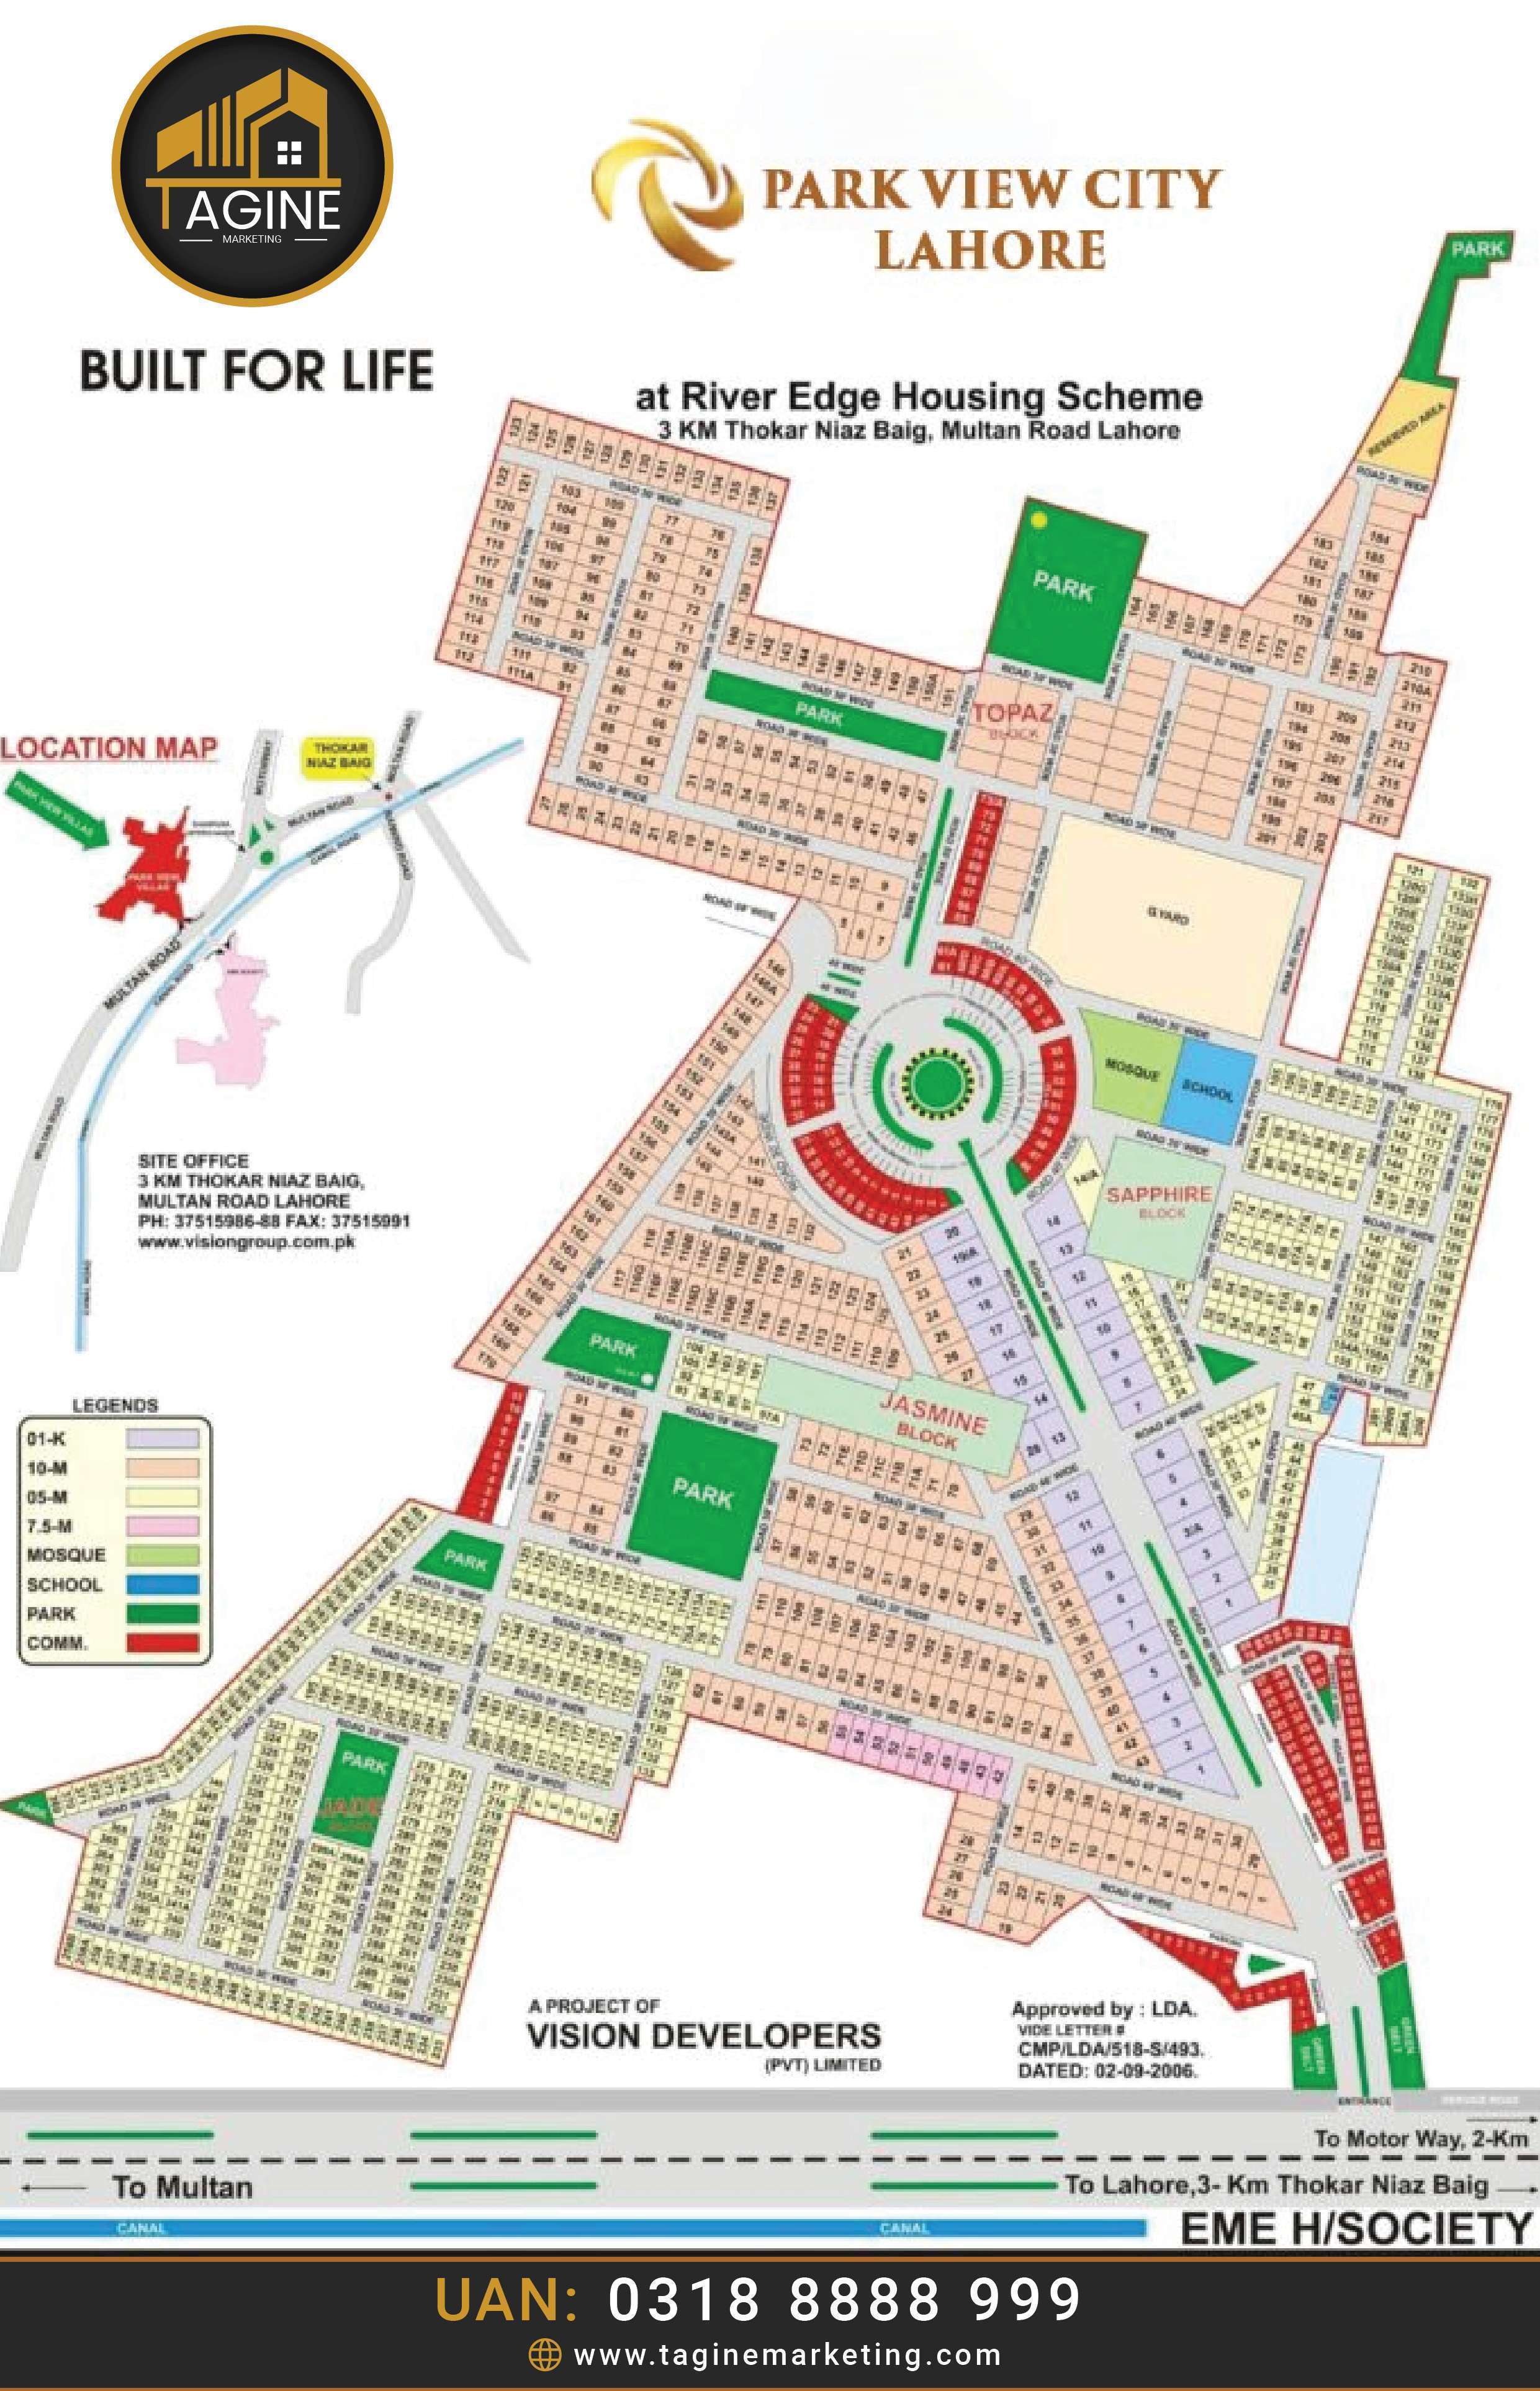 Park View City Lahore Masterplan